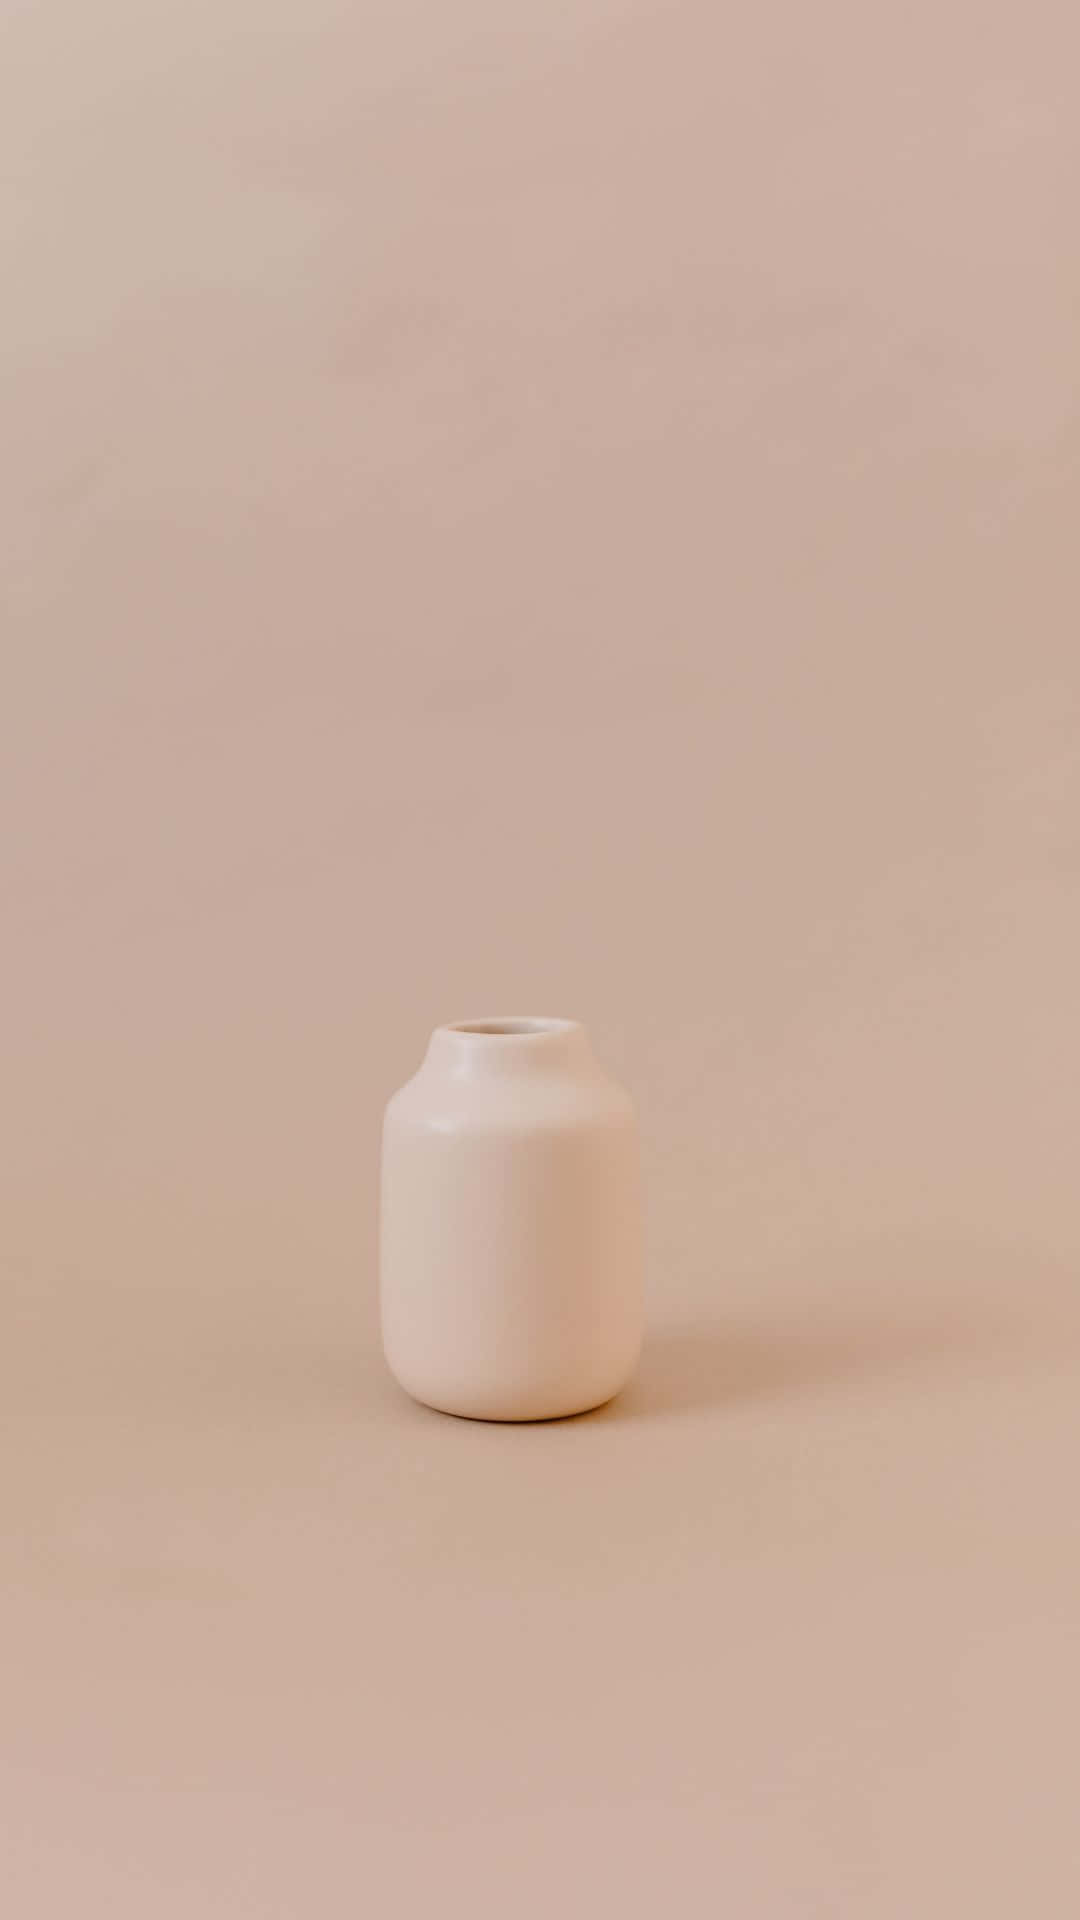 Beige Ceramic Vase Minimalist Decor Wallpaper